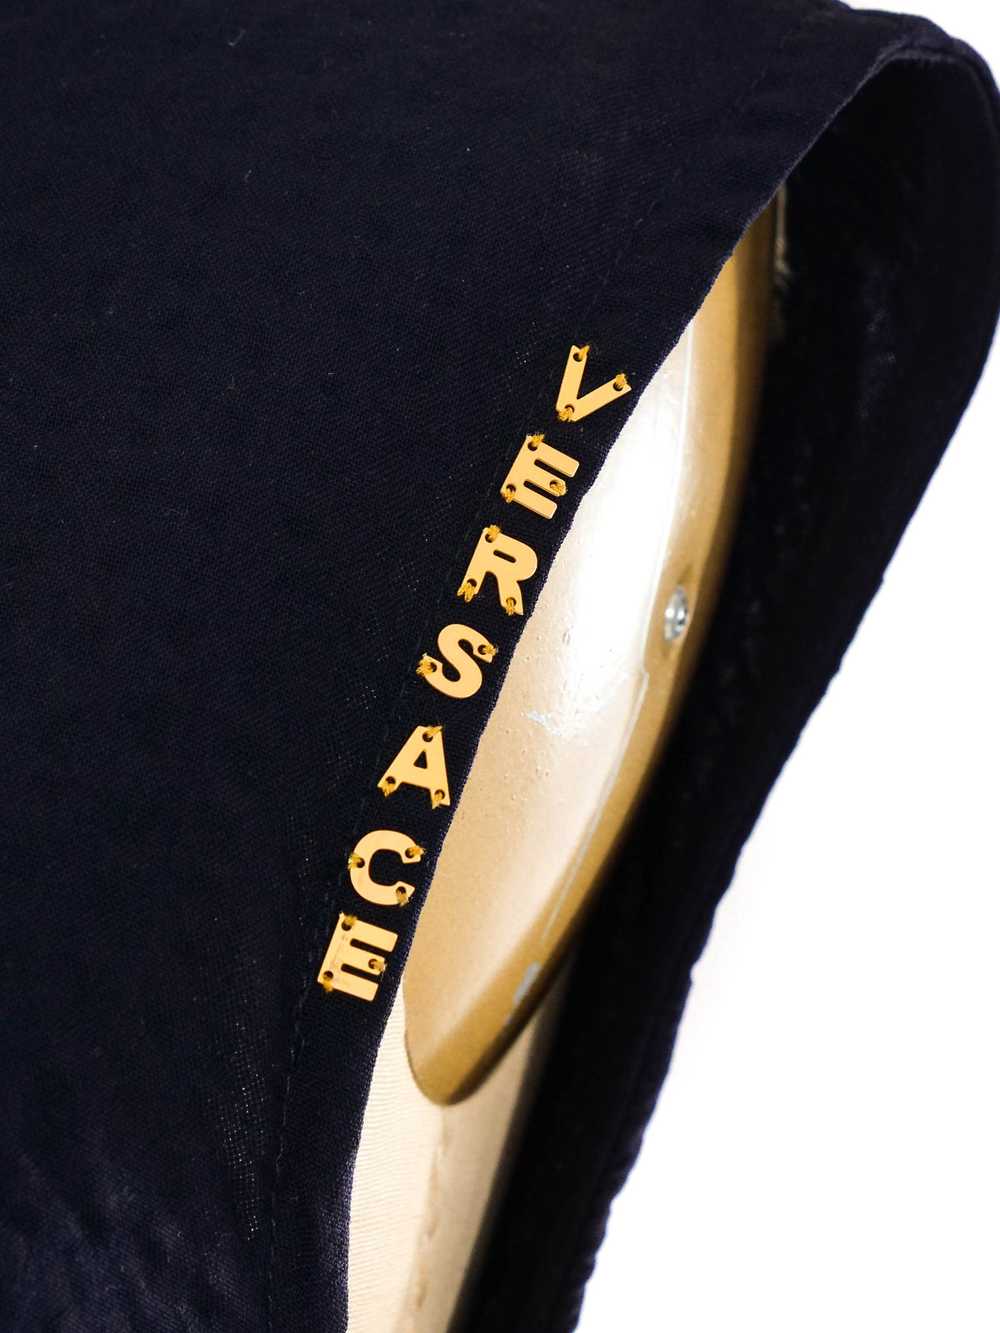 Gianni Versace Navy Crepe Shift Dress - image 2